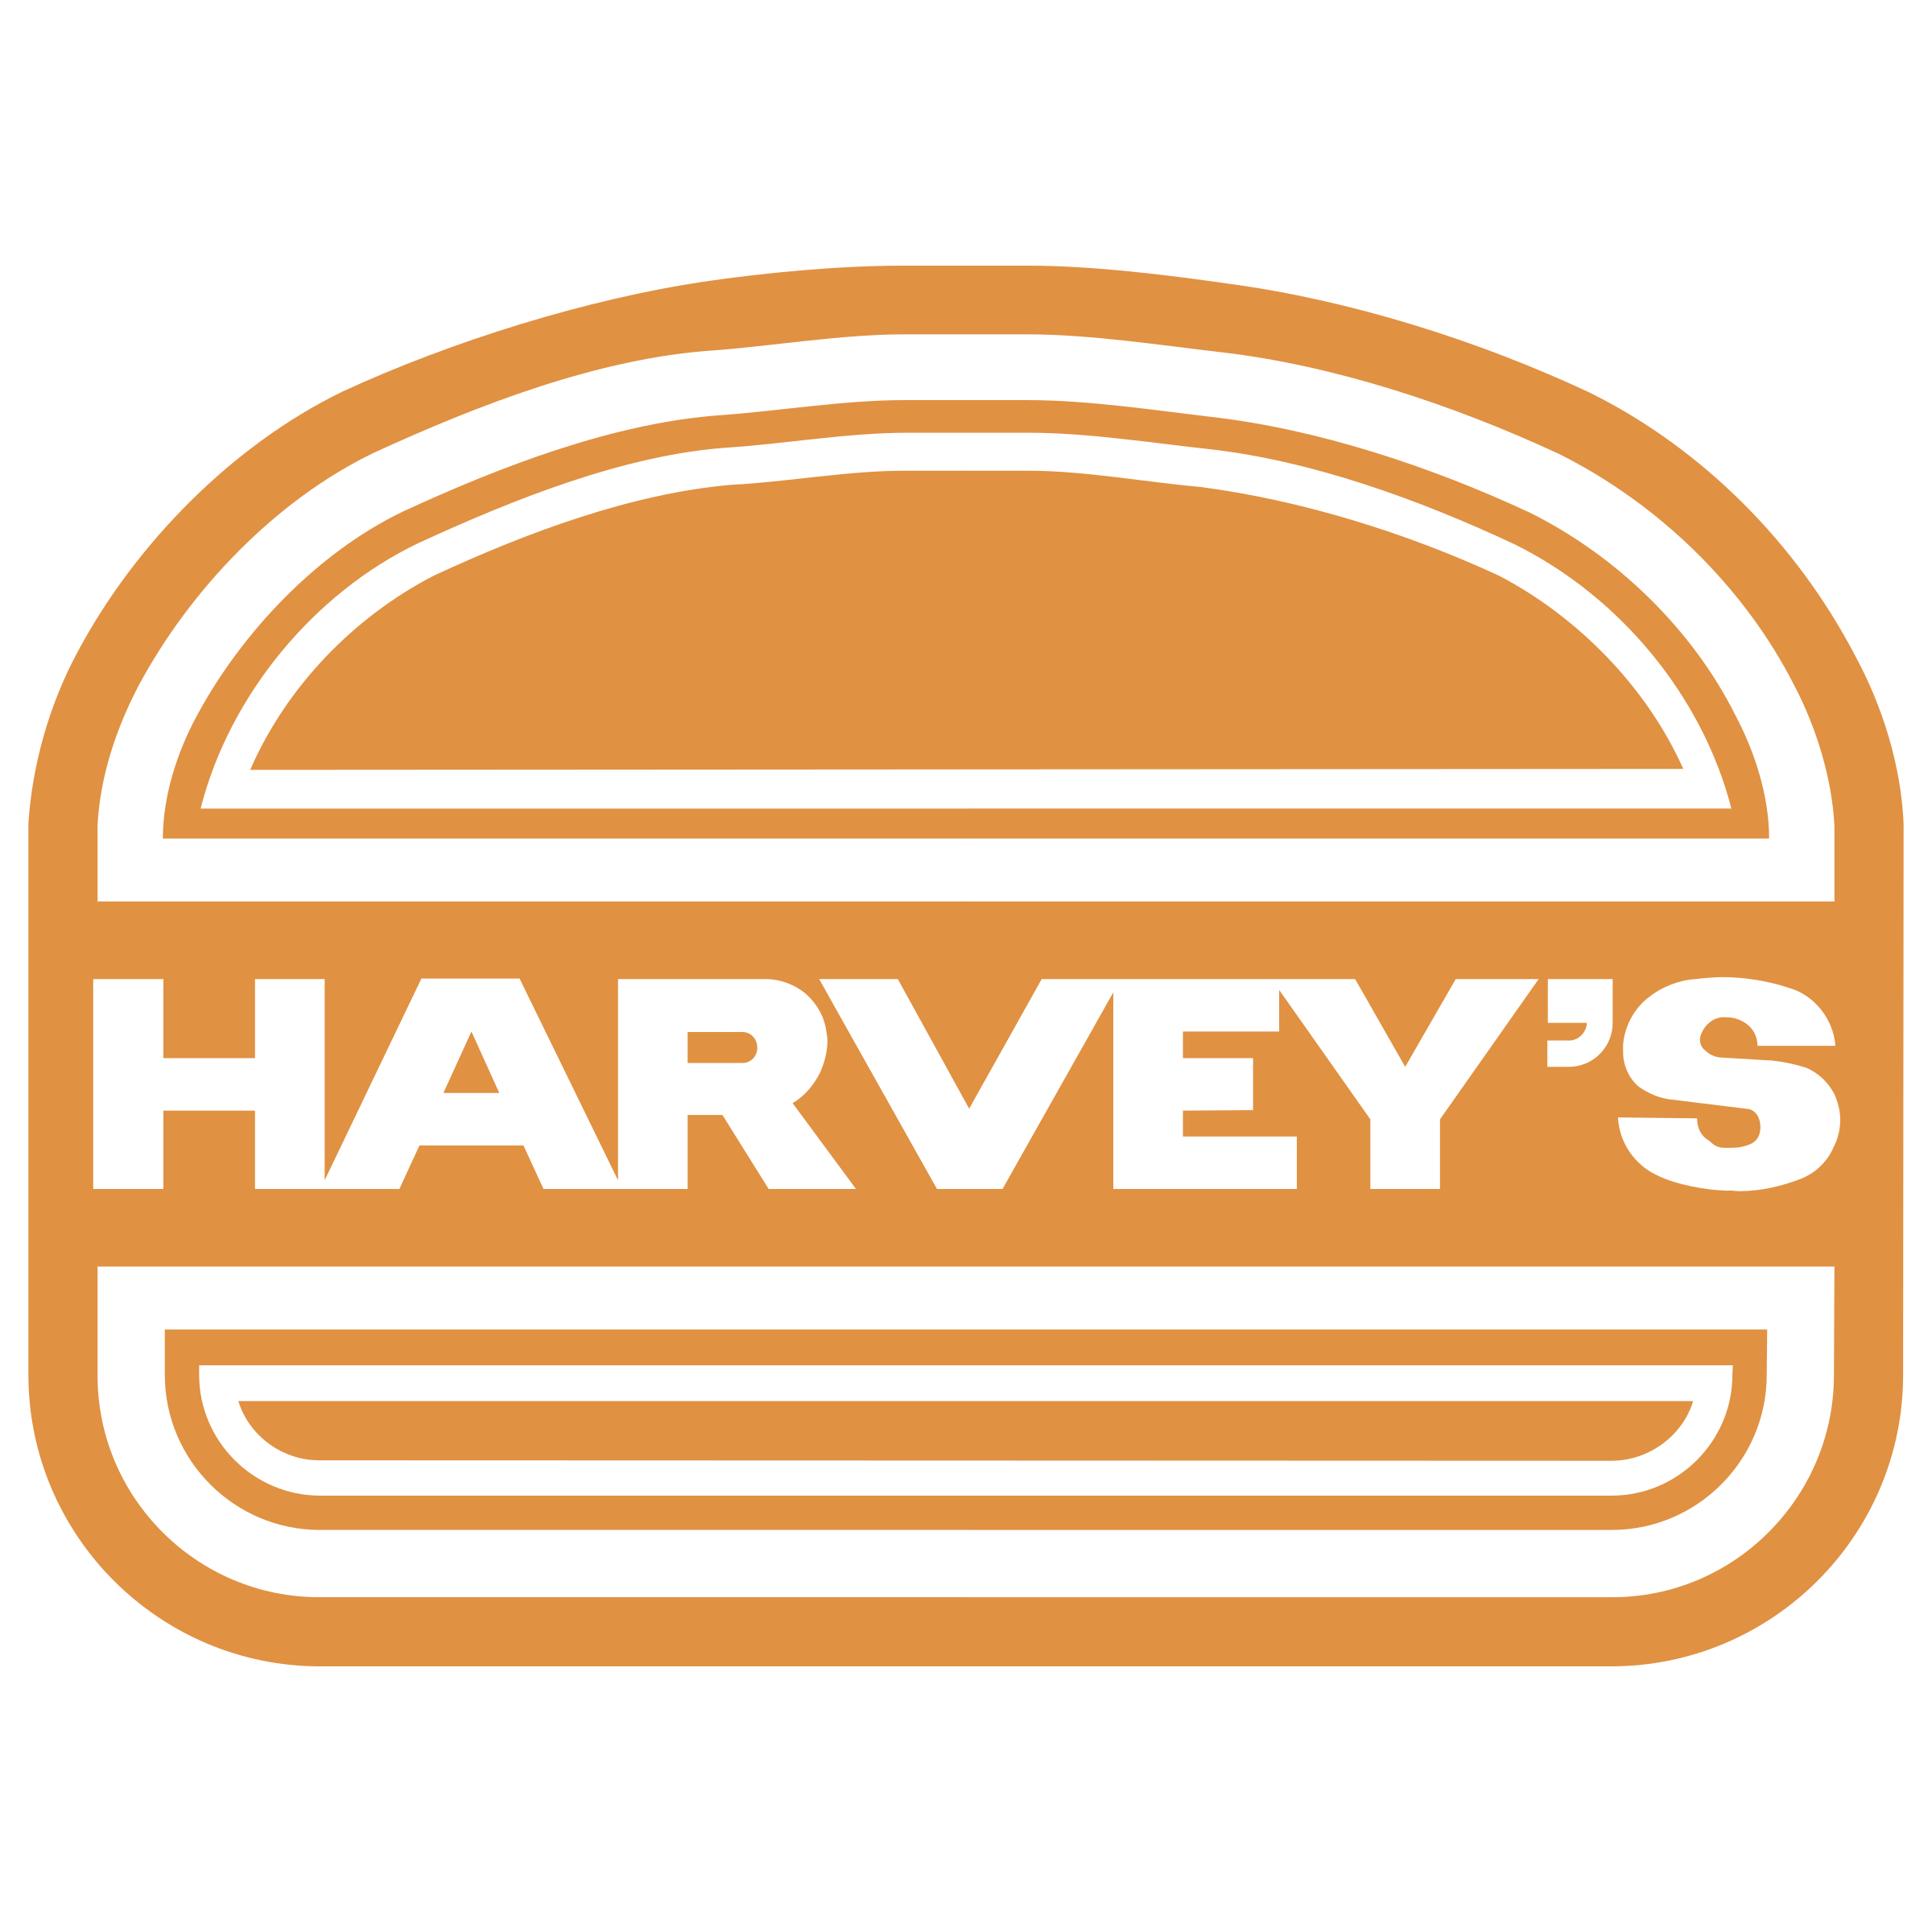 Harvey Logo - Harvey's Logo PNG Transparent & SVG Vector - Freebie Supply